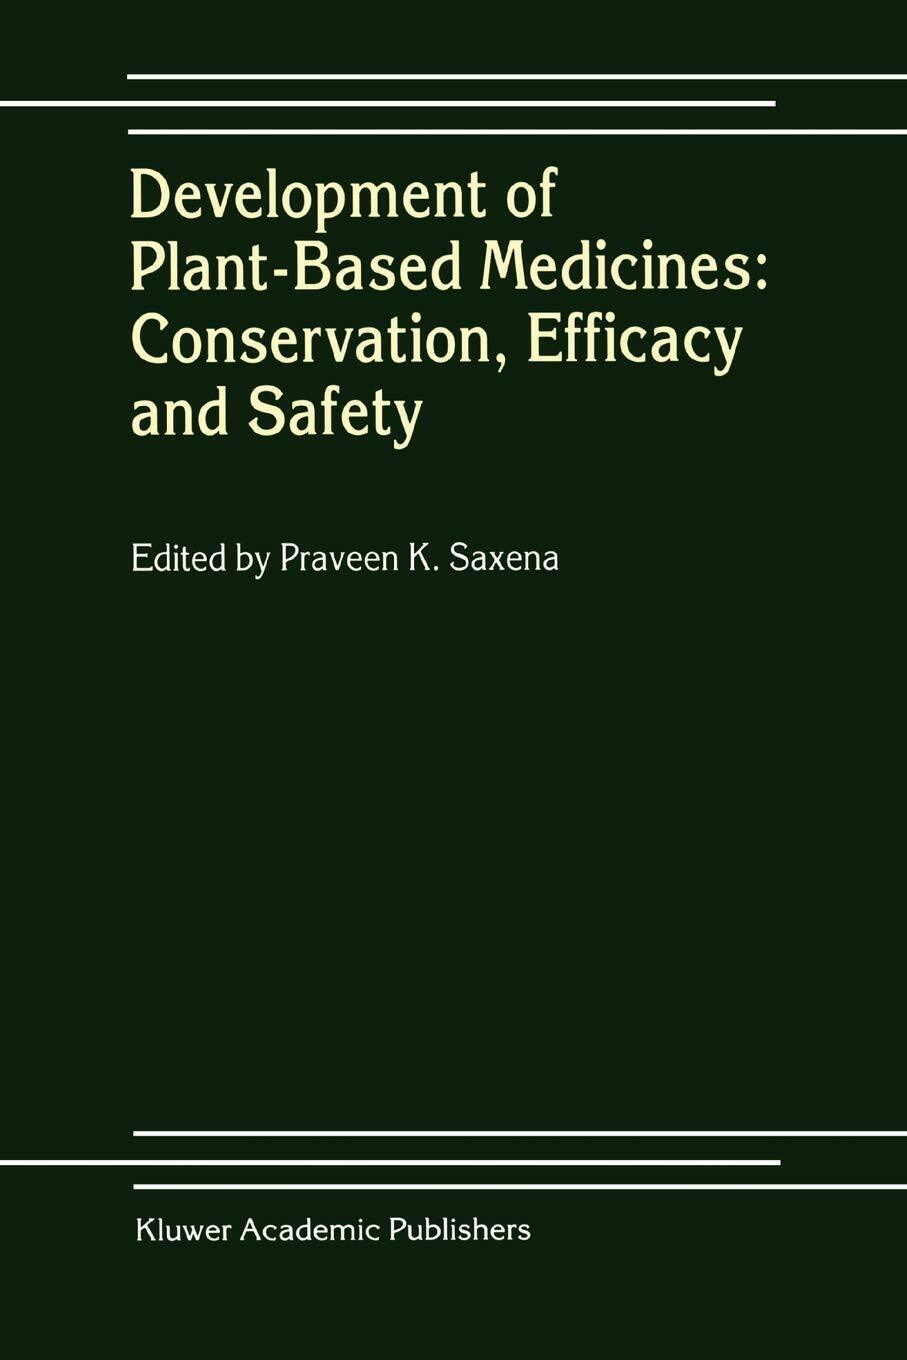 Development of Plant-based Medicines - Praveen K. Saxena - Springer, 2010